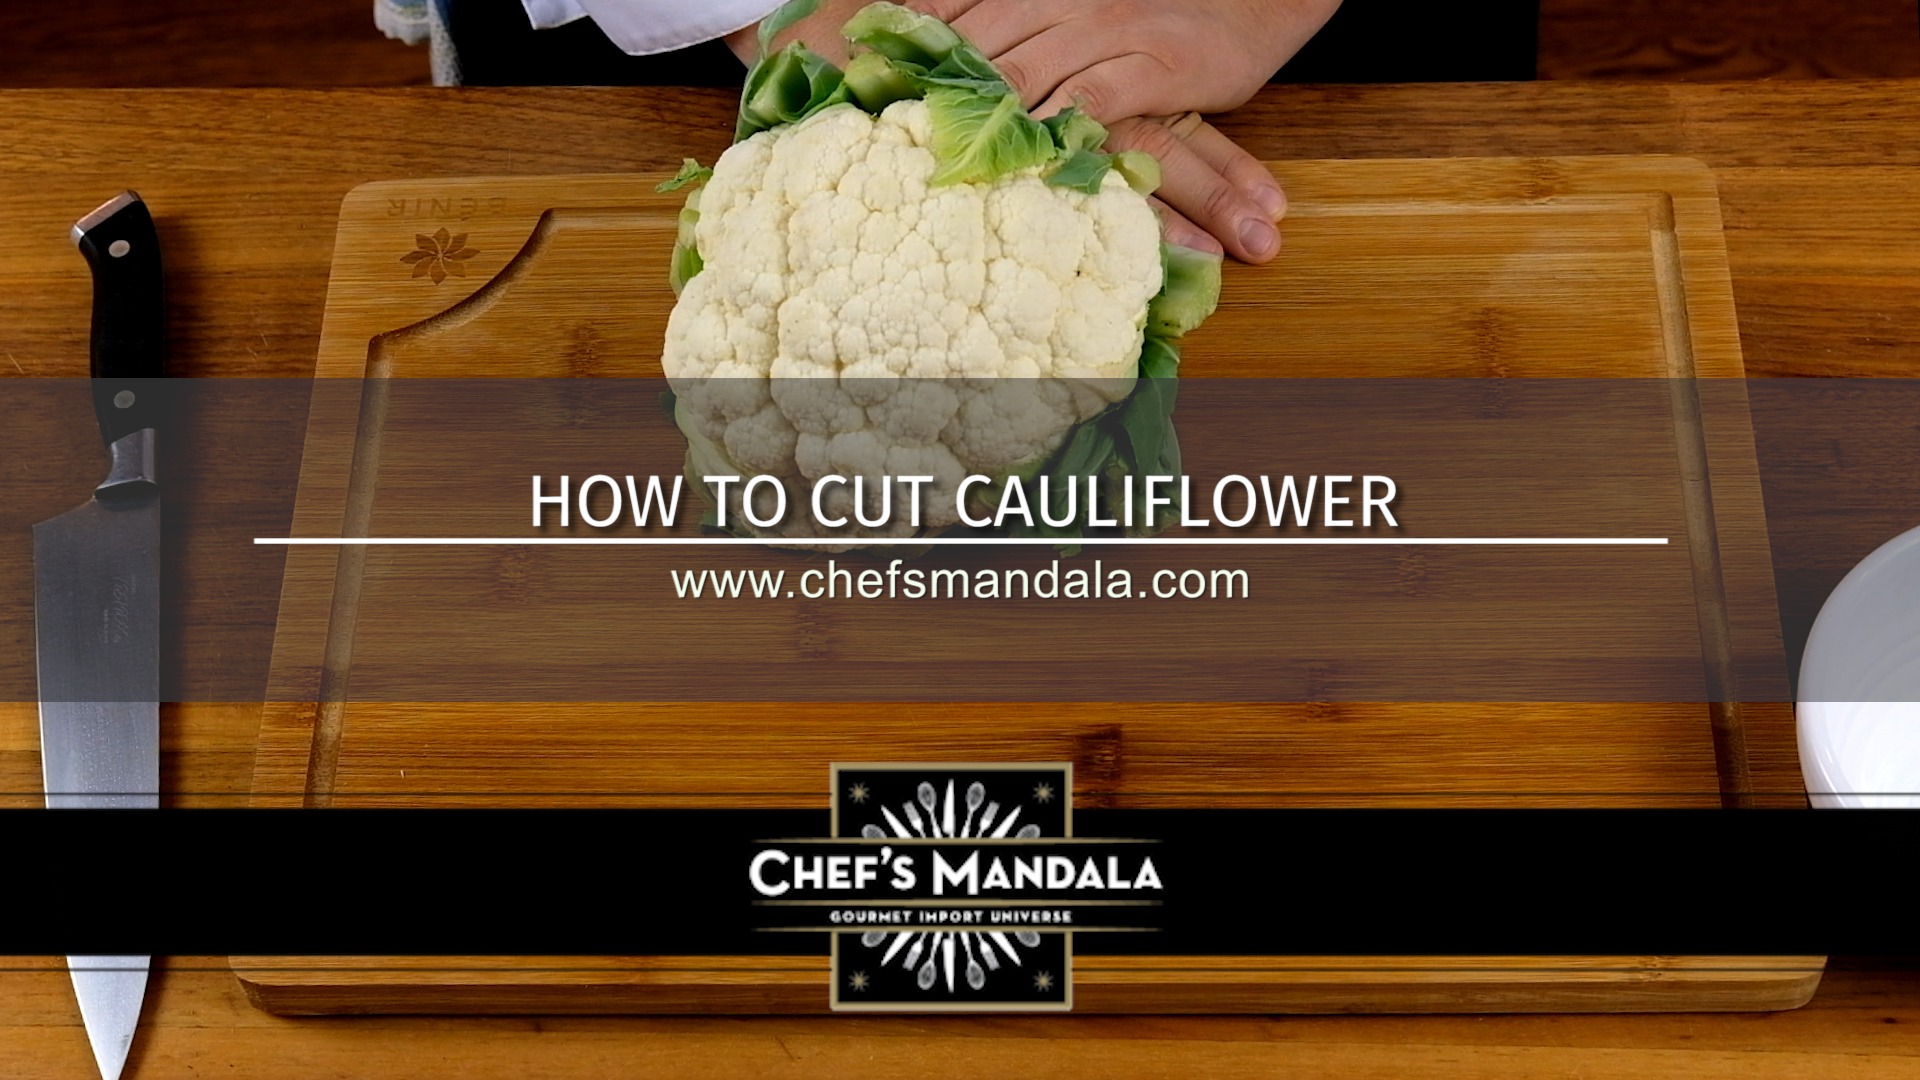 HOW TO CUT CAULIFLOWER